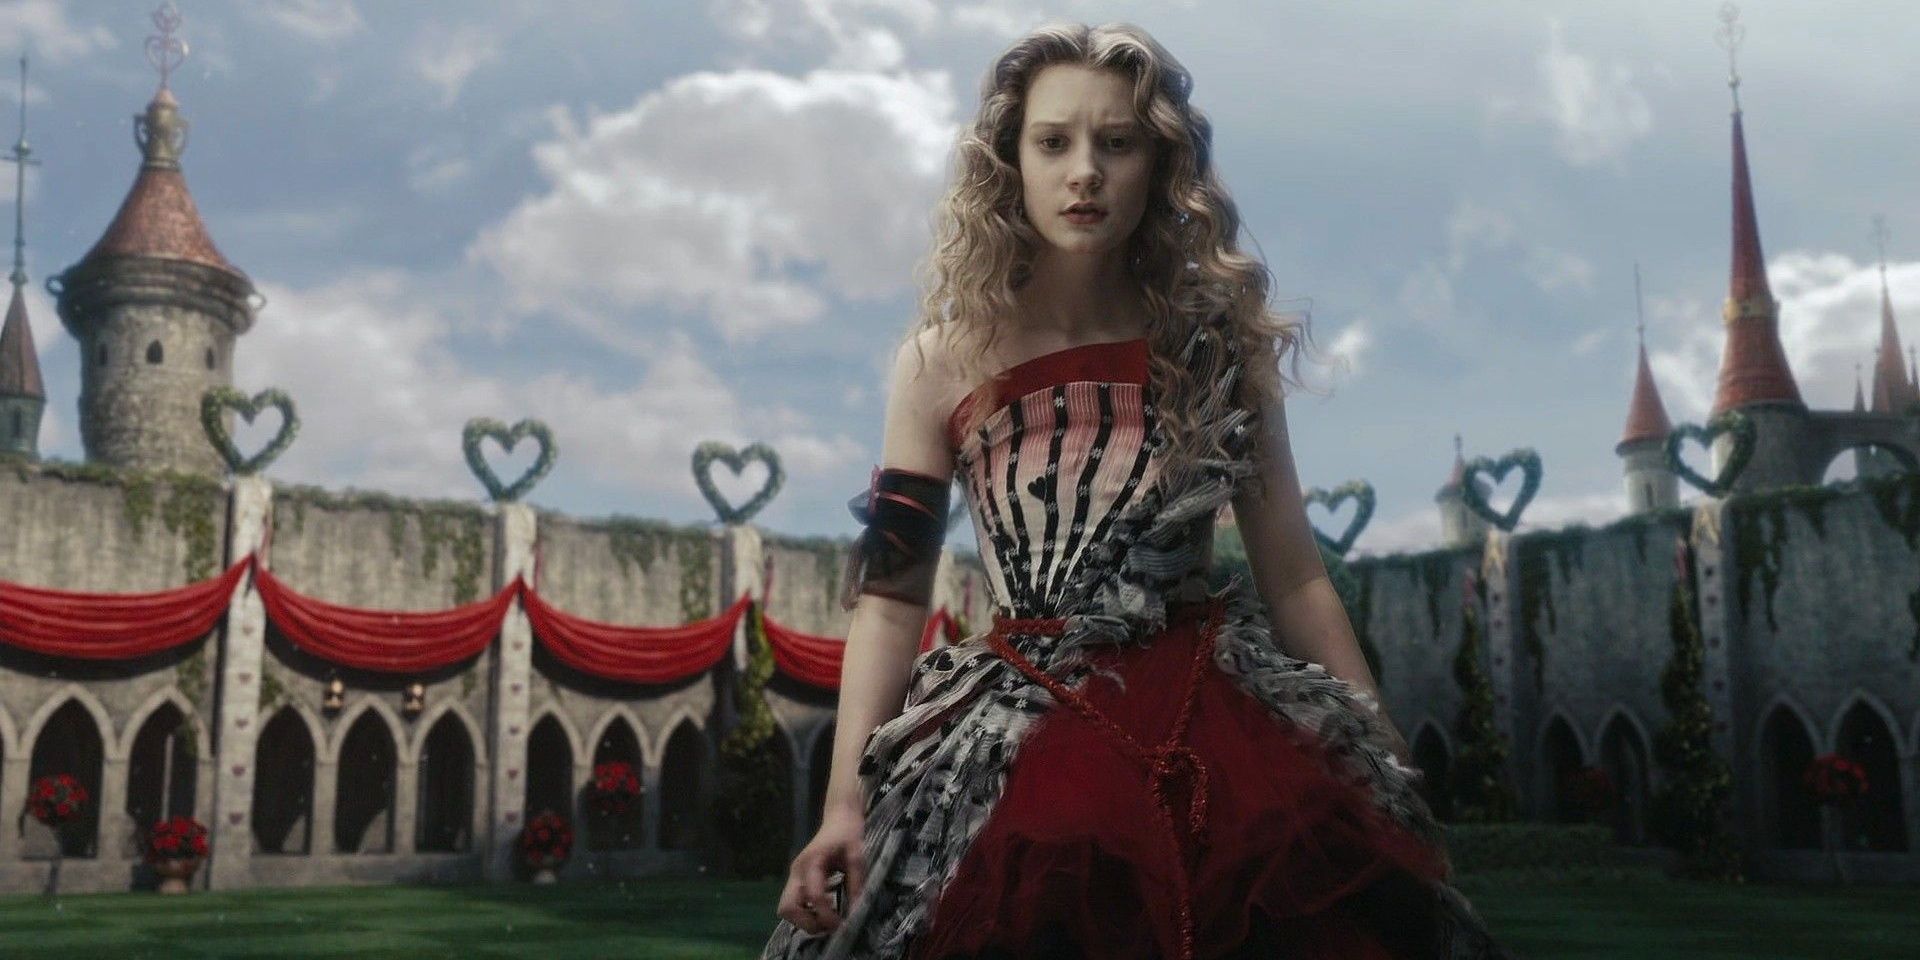 Mia Waikowska as Alice in Alice in Wonderland (2010)